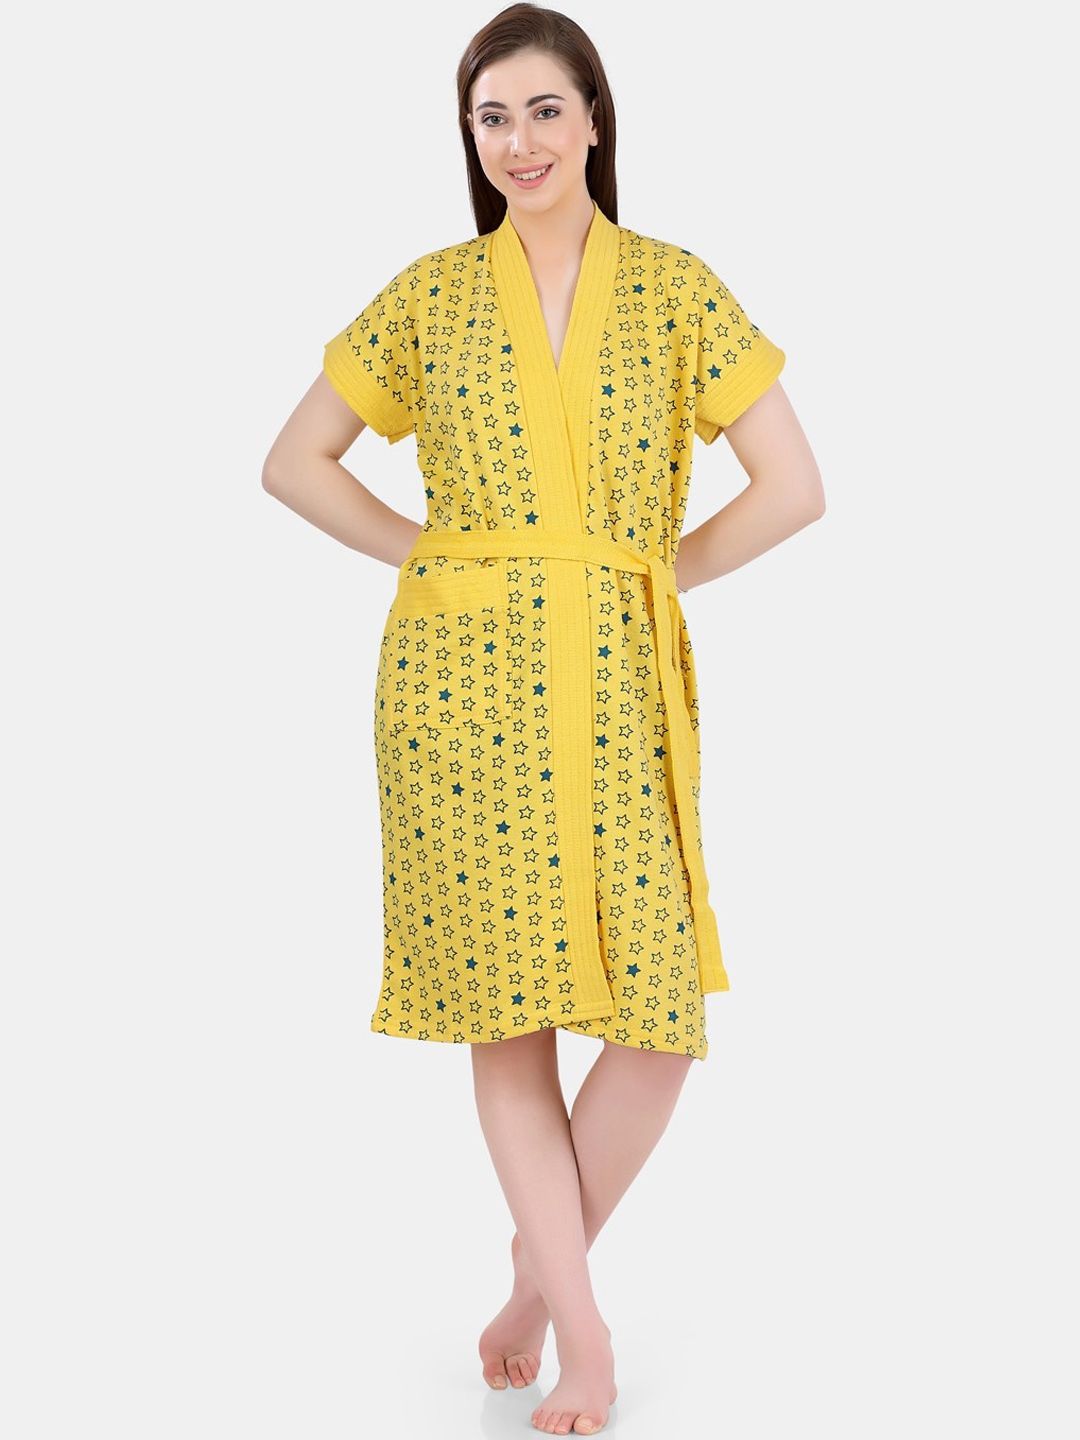 POPLINS Woman Yellow & Blue Printed Bath Robe Price in India